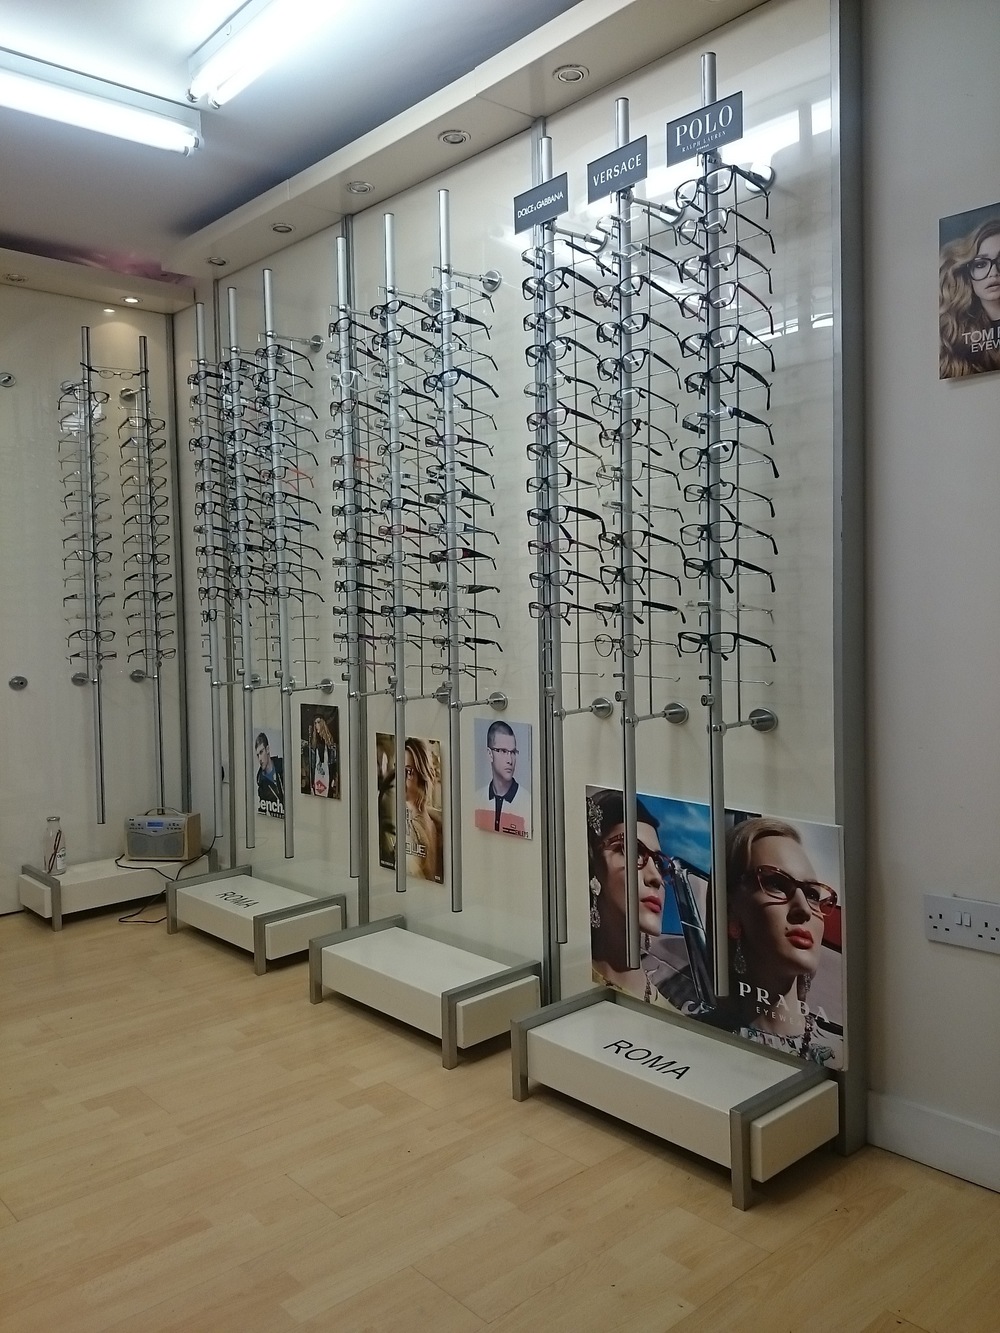 Grove Park Opticians South London Club